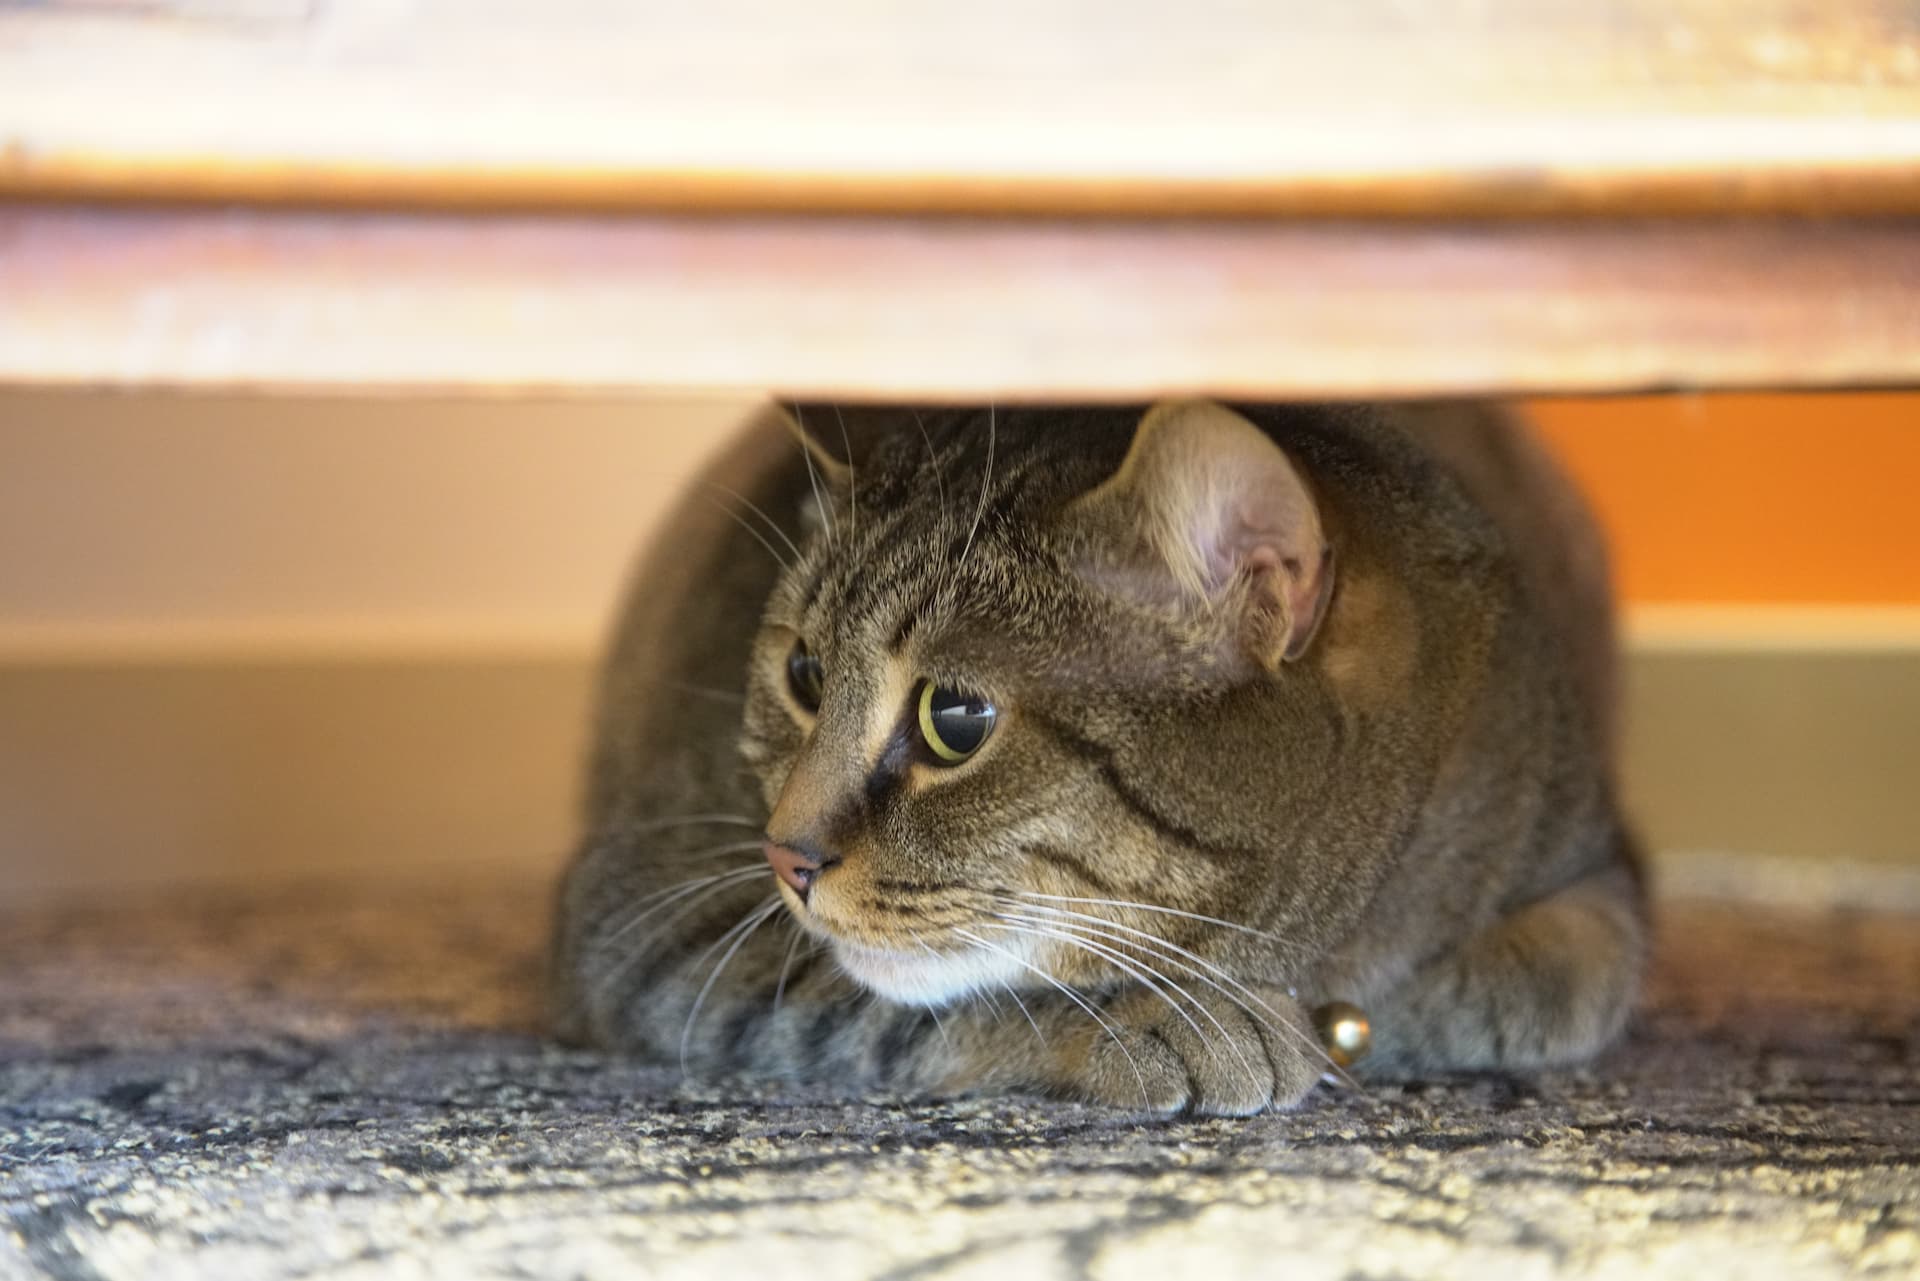 cat hiding underneath something, on the floor